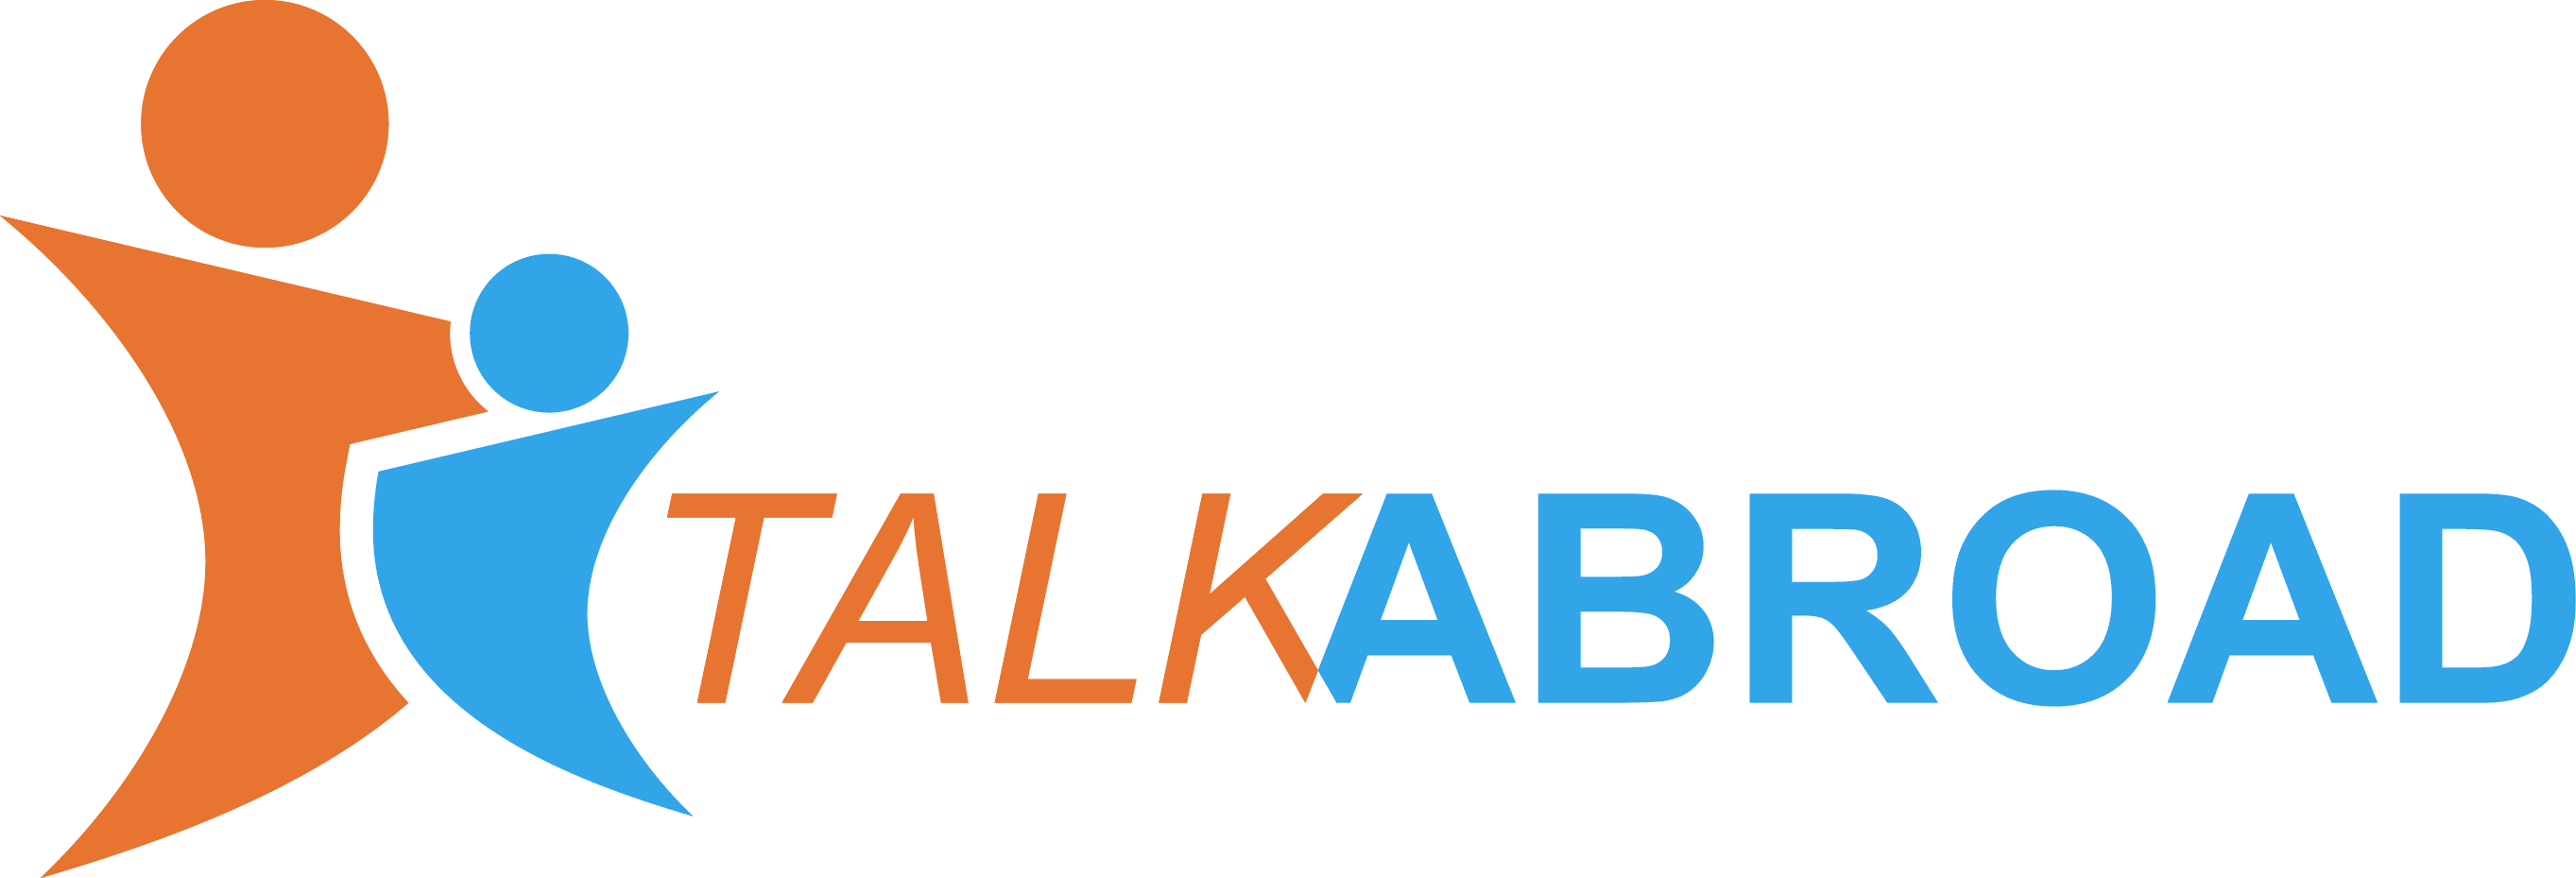 talkabroadlogo.png